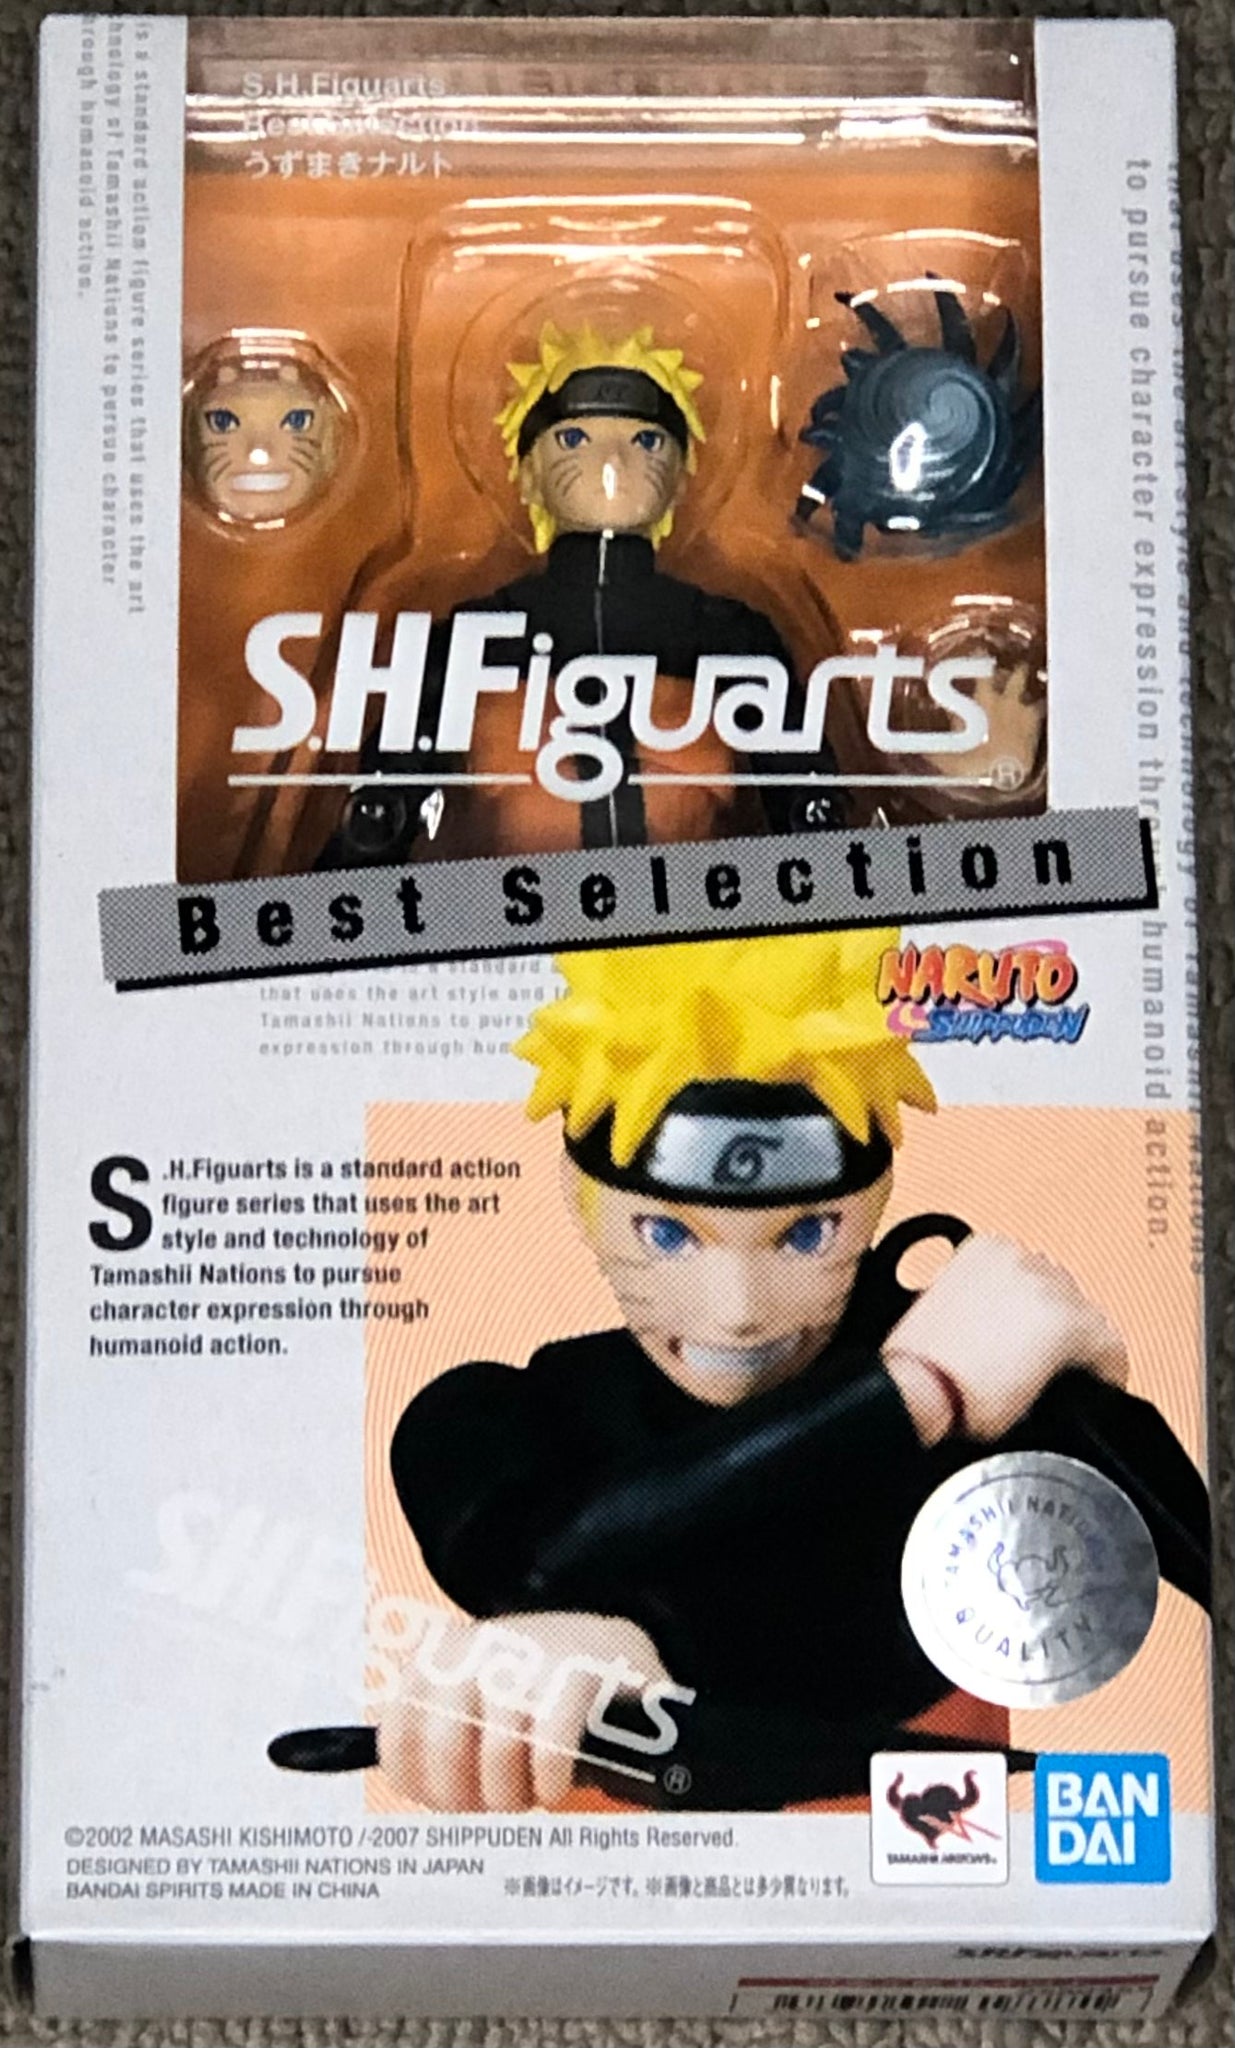 Naruto Shippuden: Naruto Uzumaki (Best selection) New Package Ver S.H.Figuarts